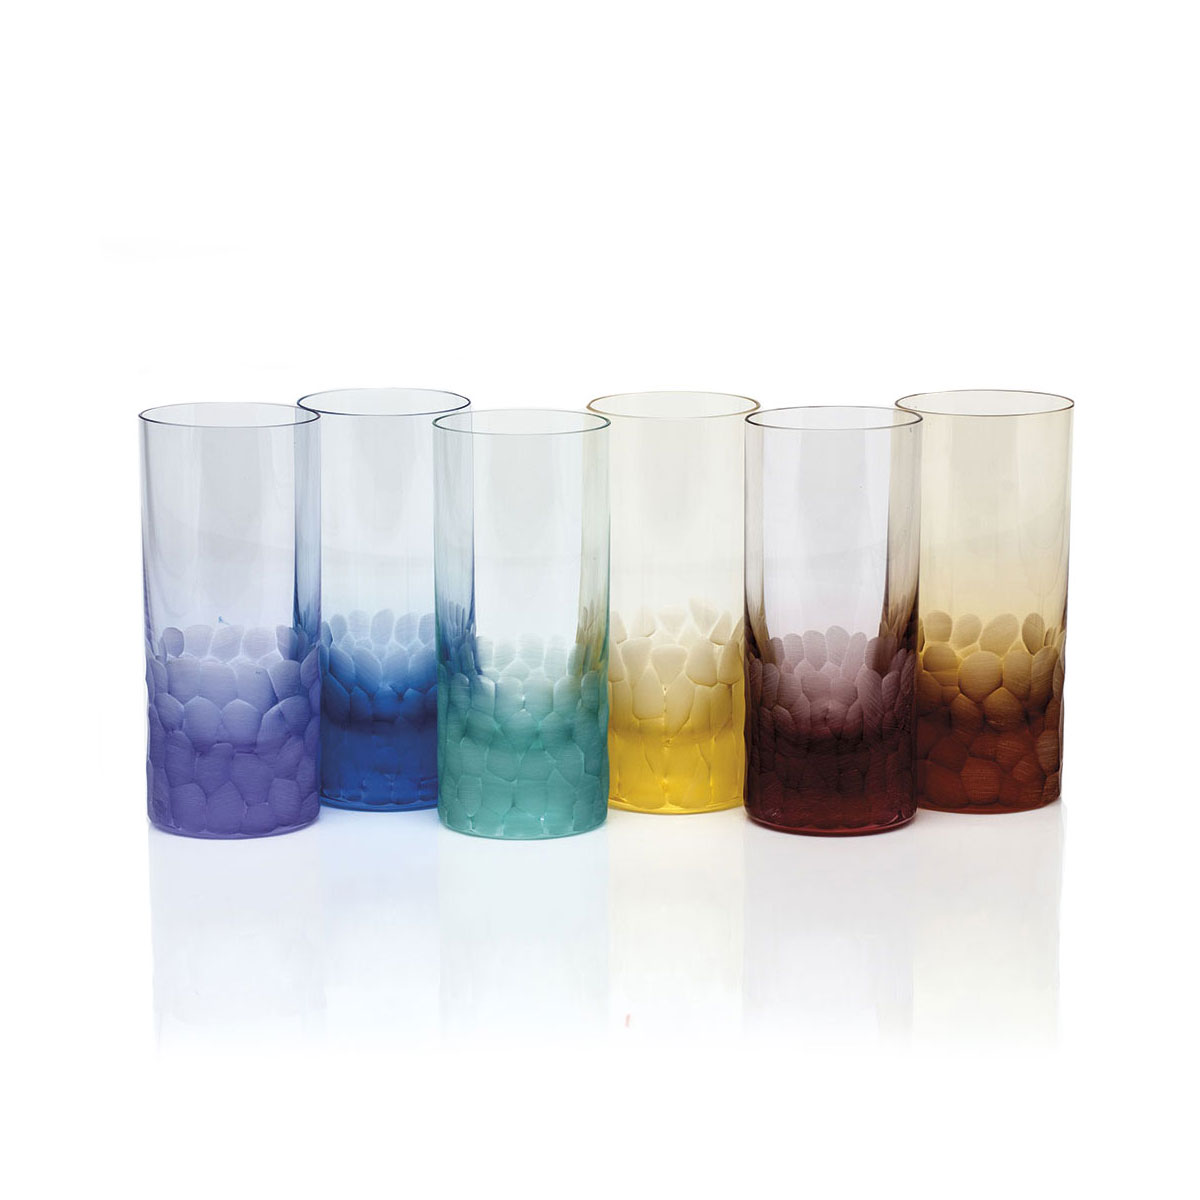 Moser Crystal Pebbles Hiball Glasses, Set of 6, Rainbow Colors